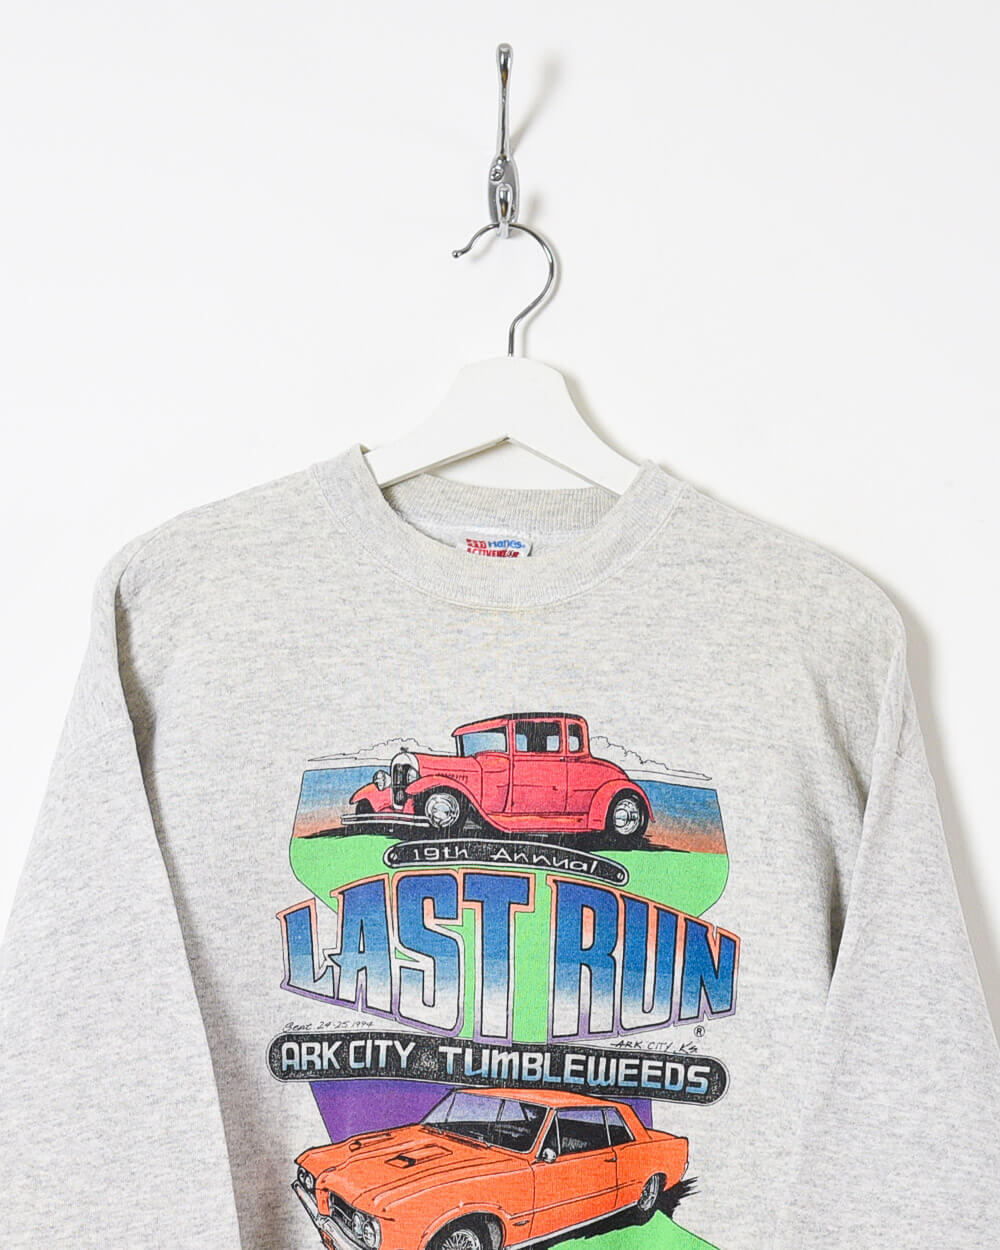 Hanes Last Run Ark City Tumbleweeds Sweatshirt - Large - Domno Vintage 90s, 80s, 00s Retro and Vintage Clothing 